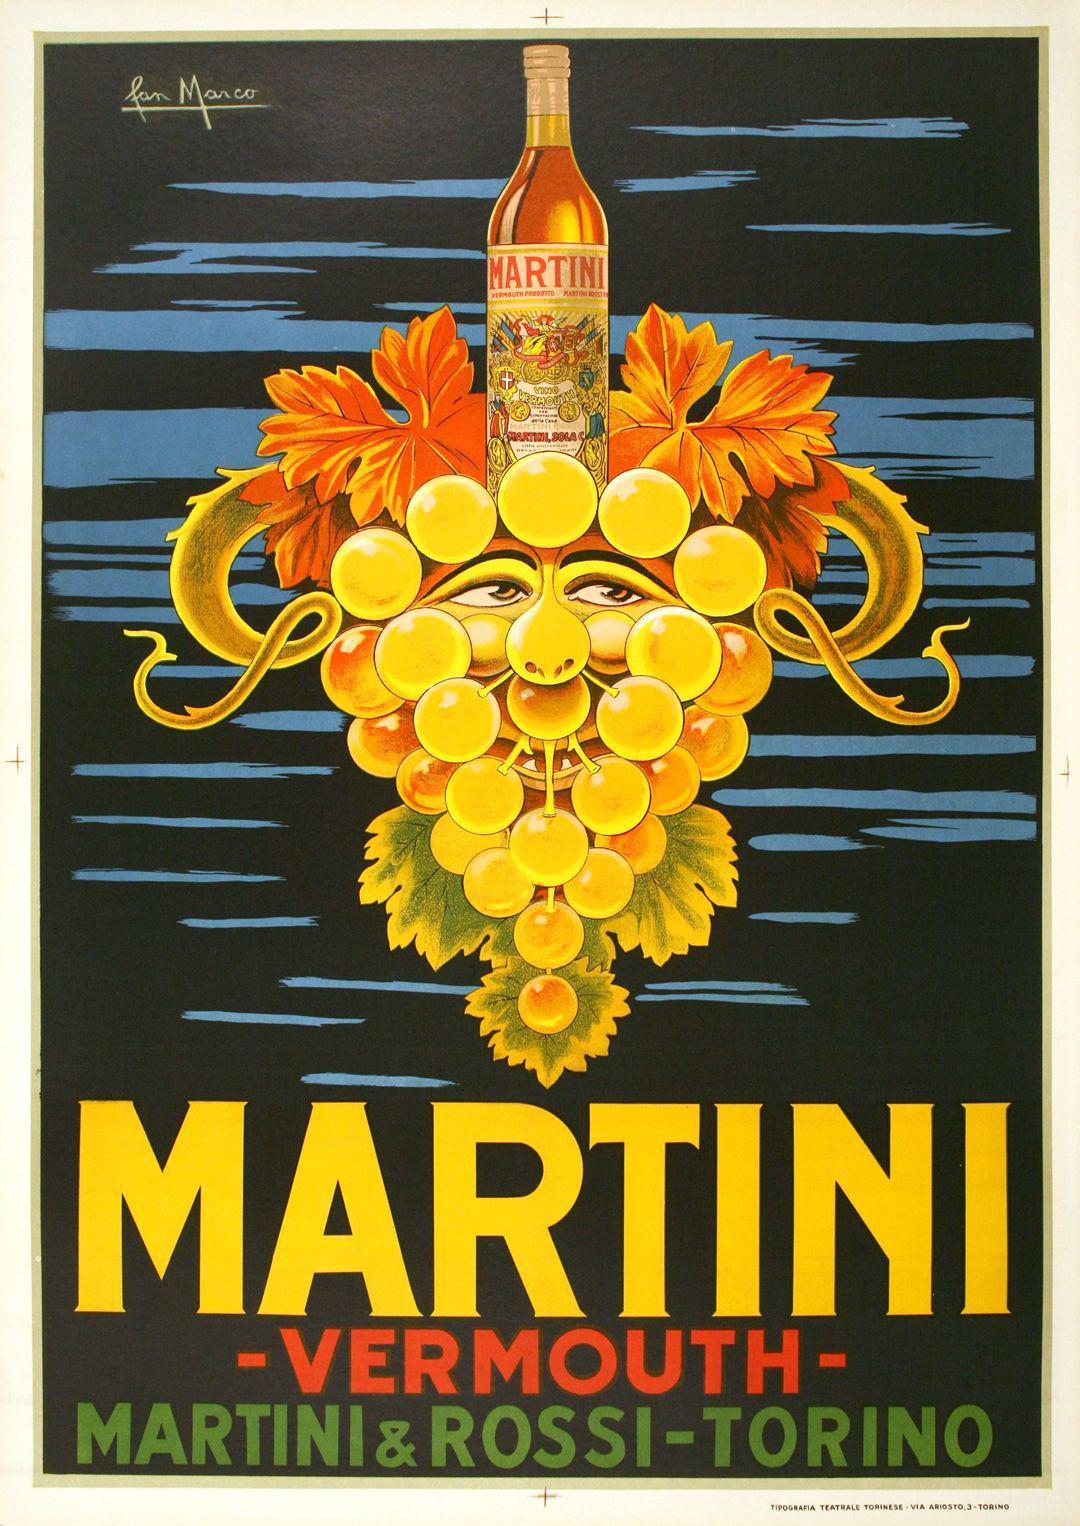 Vermouth Martini Original Vintage Poster by San Marco 1950's Italian Liqueur